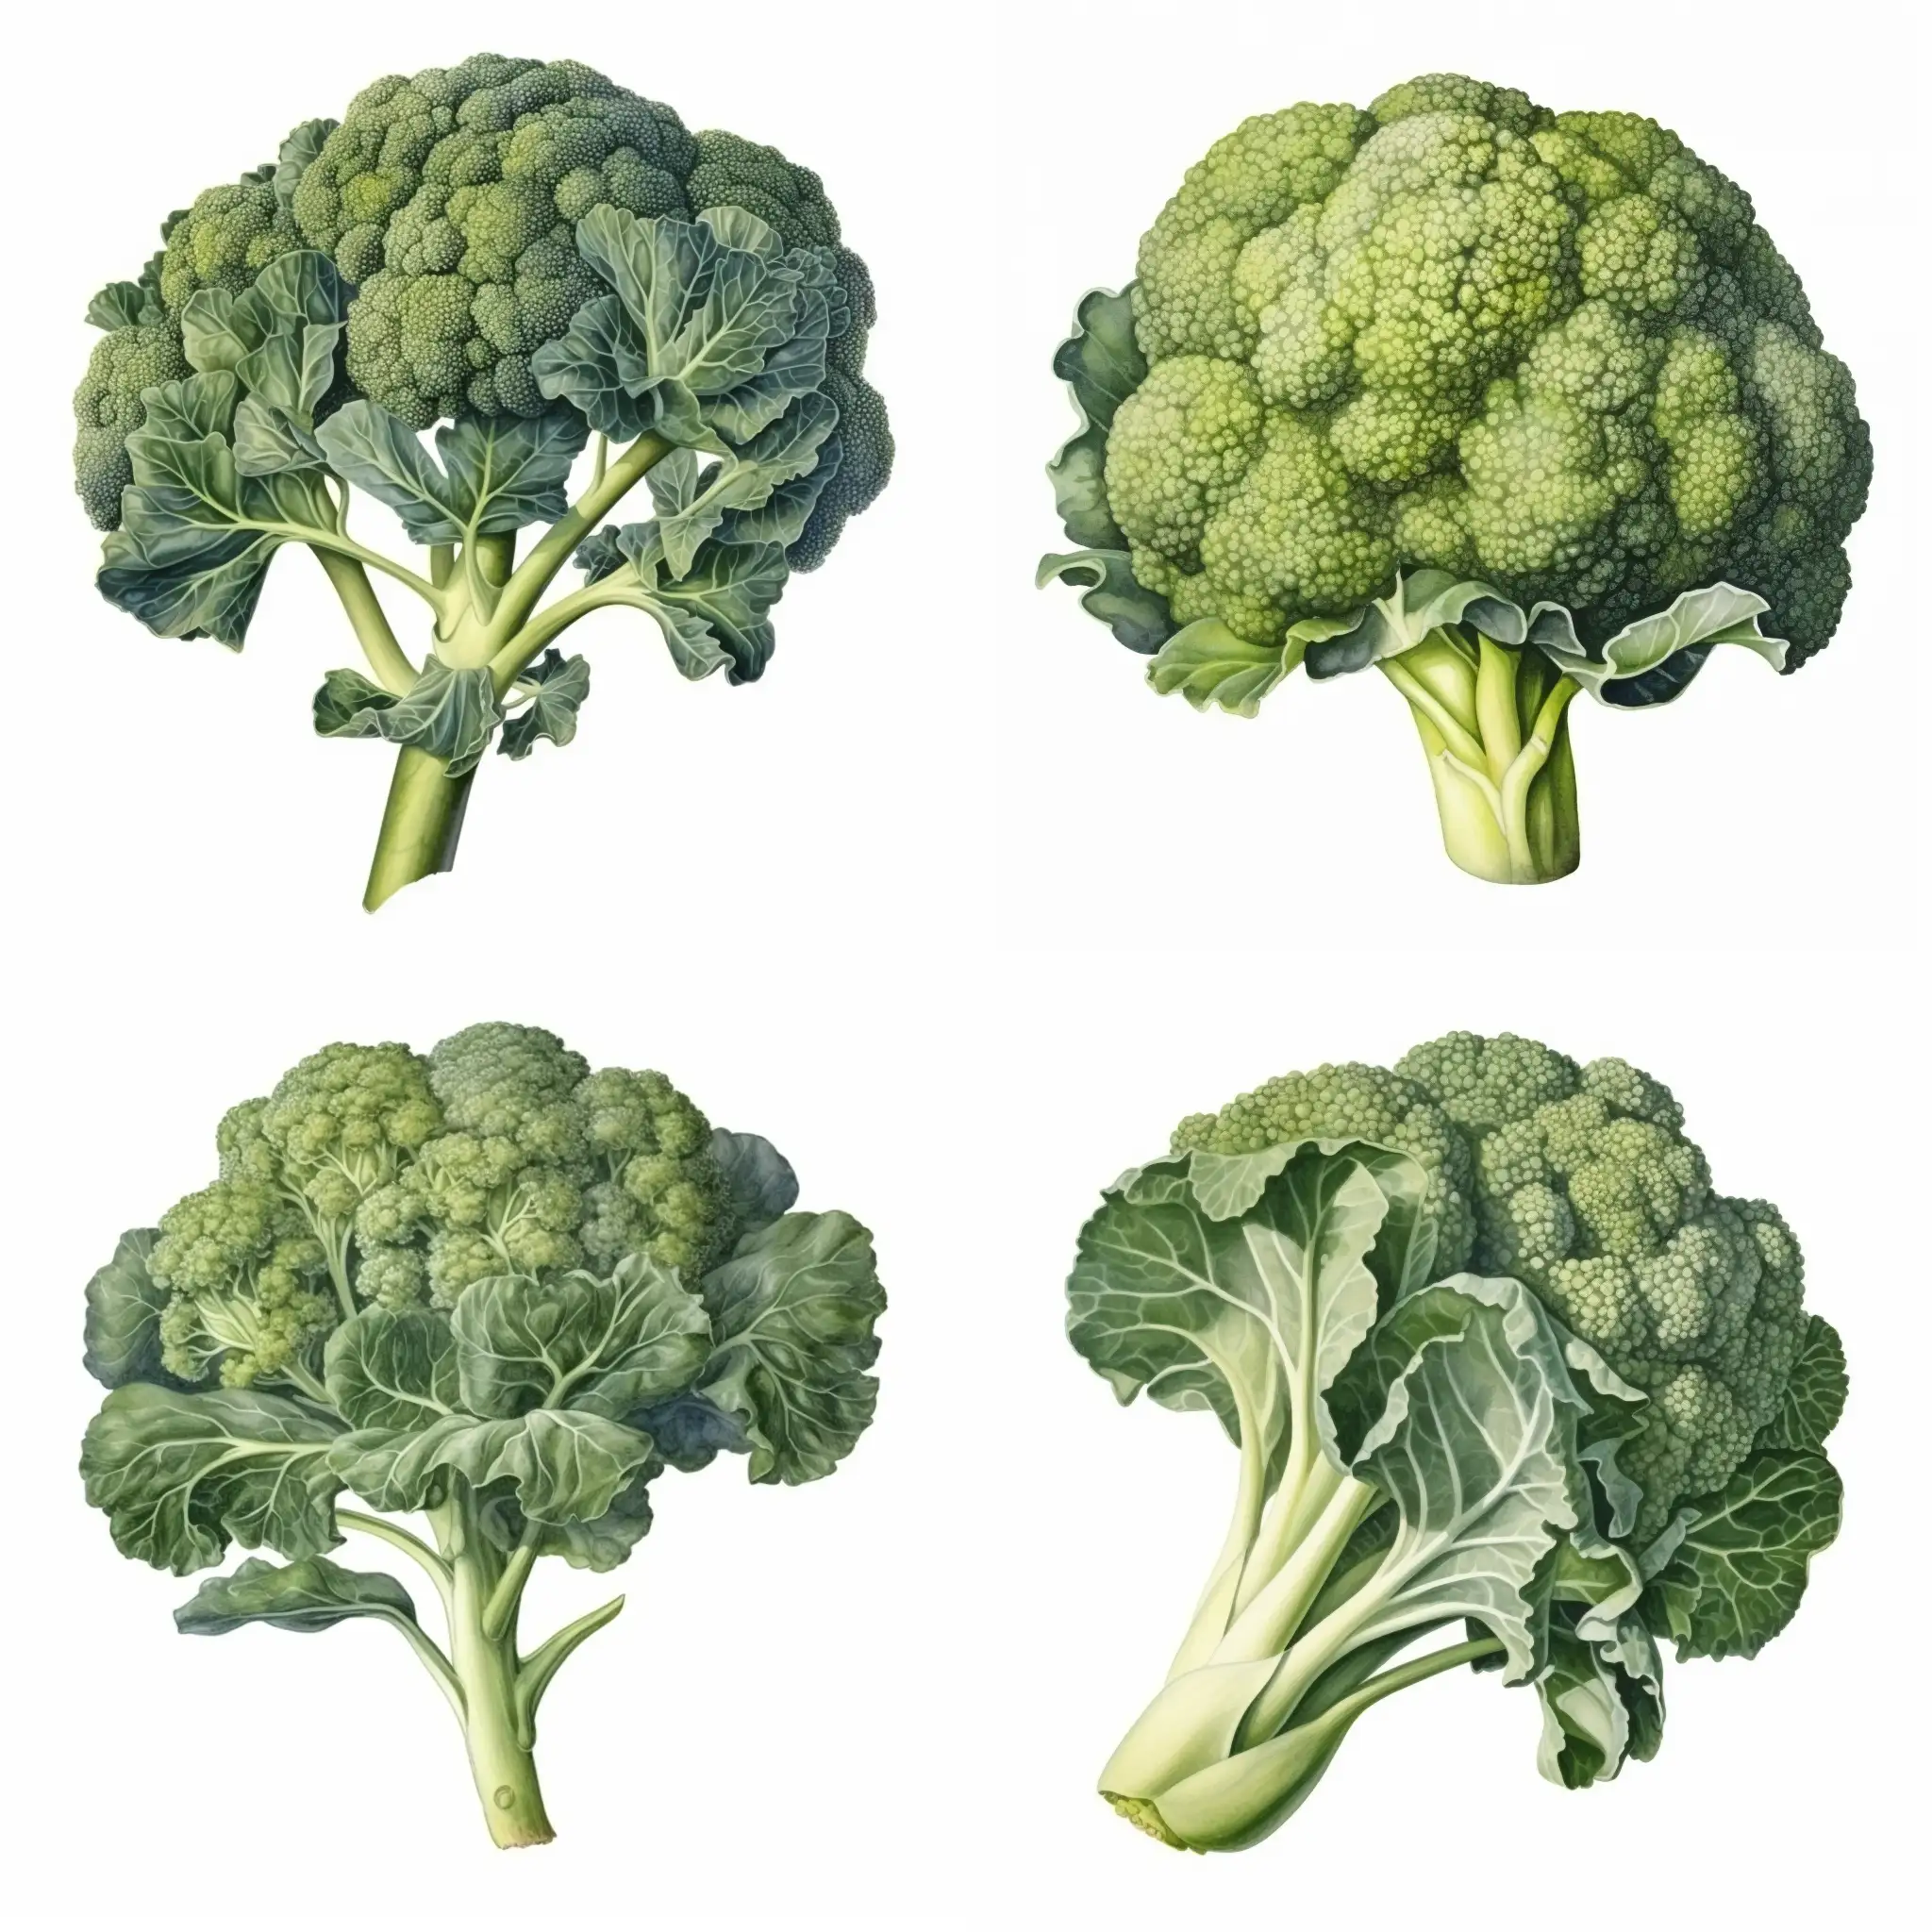 Vibrant-Watercolor-Broccoli-Illustration-on-White-Background